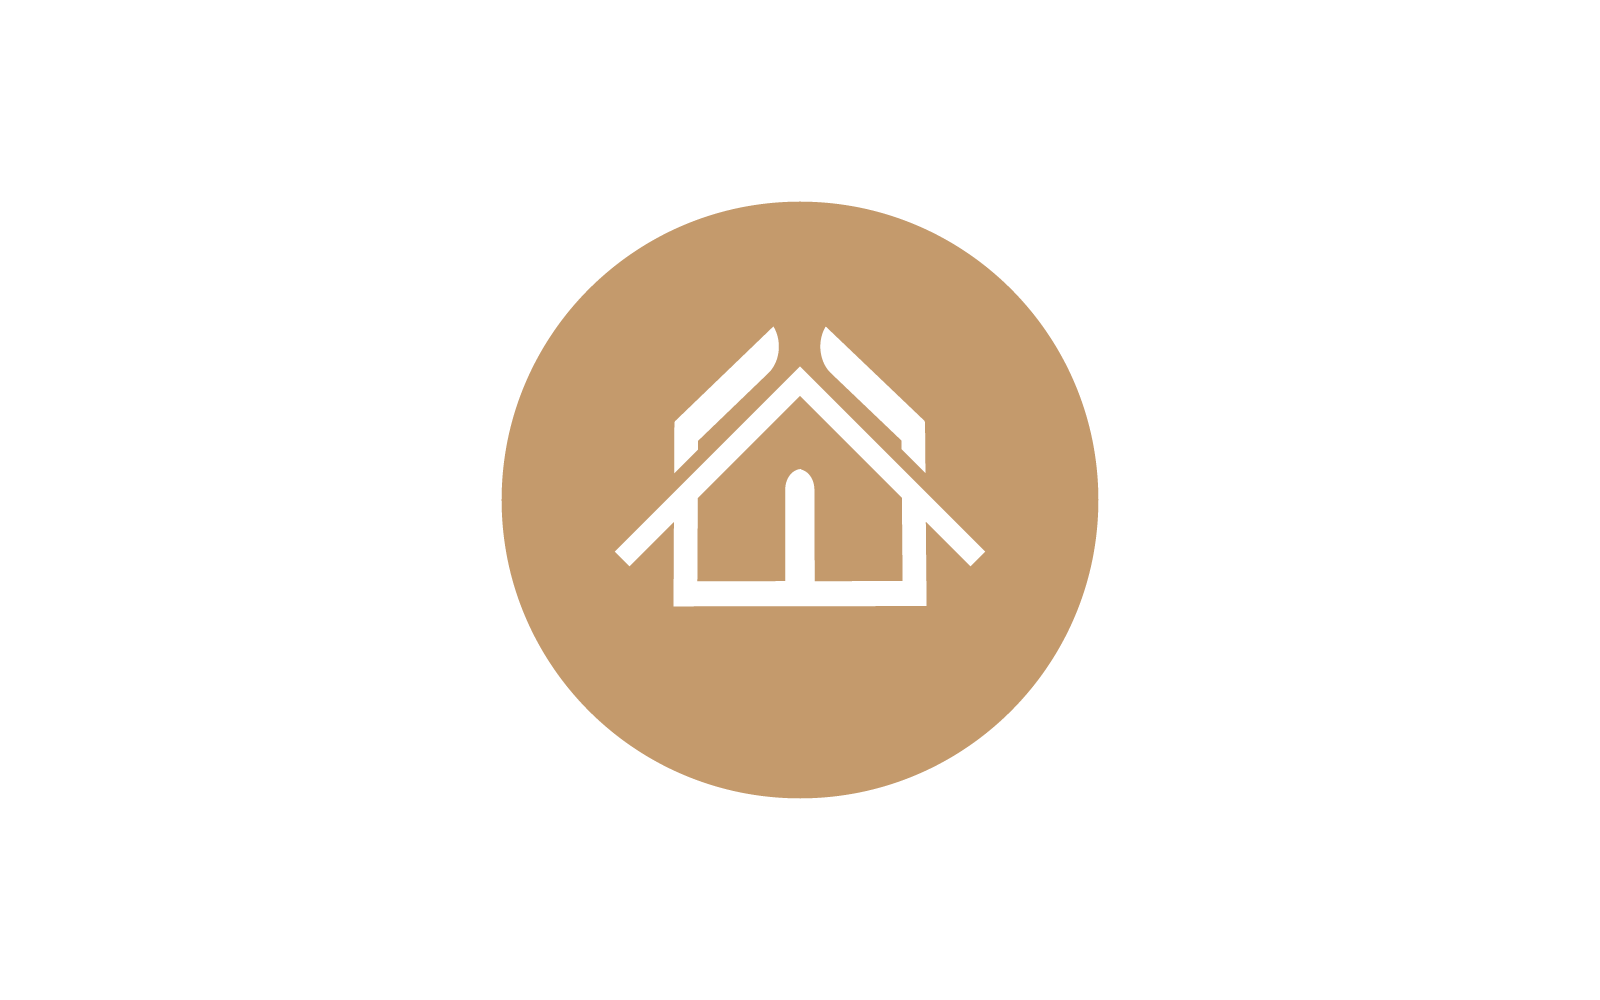 H Letter Property Logo icon vector design Template Logo Template